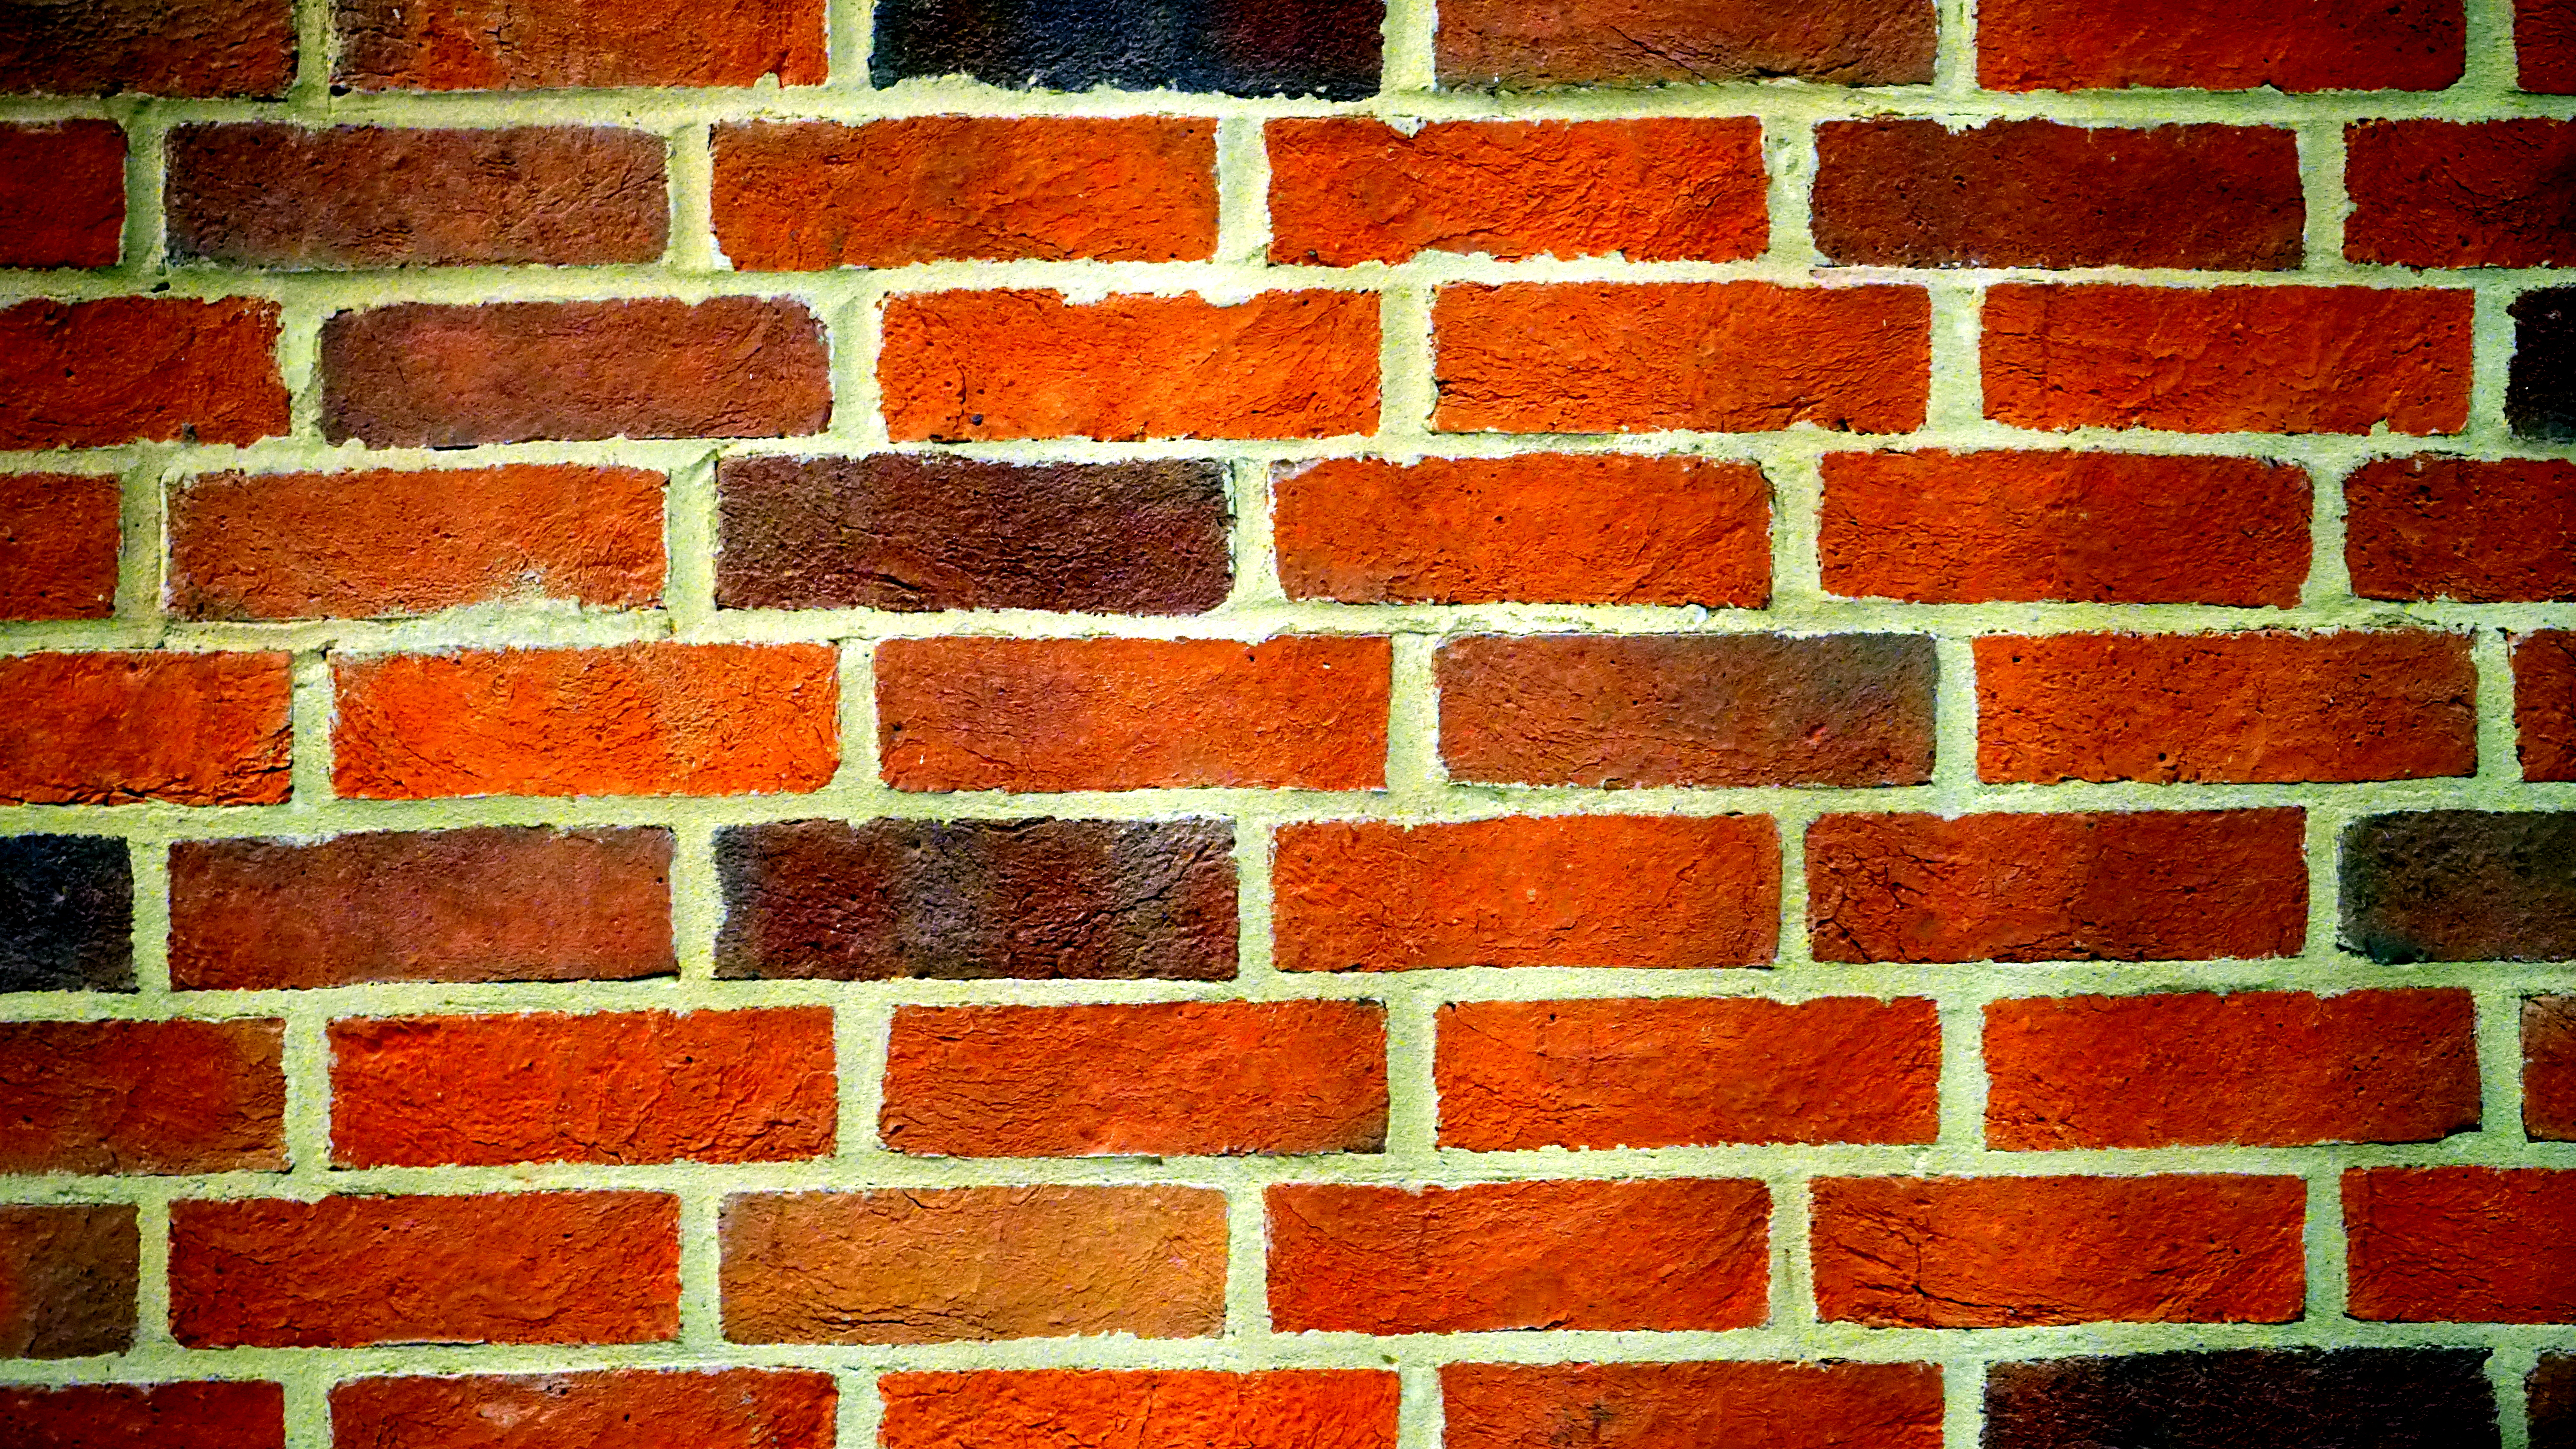 Brick Texture Wall 6000x3376